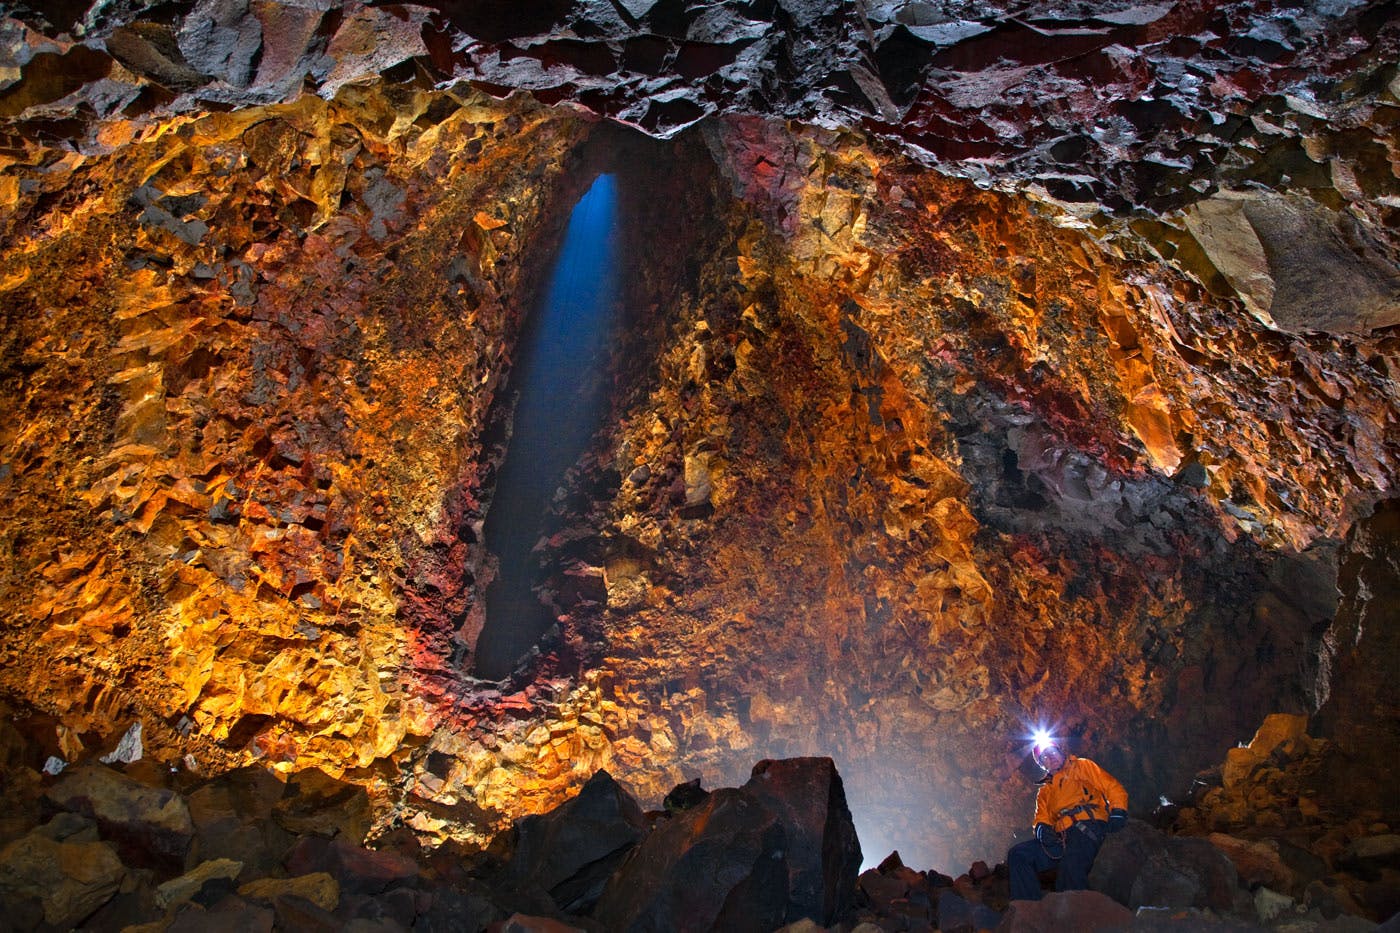 Þríhnúkagígur volcano's magma chamber is filled with incredible colour patterns.